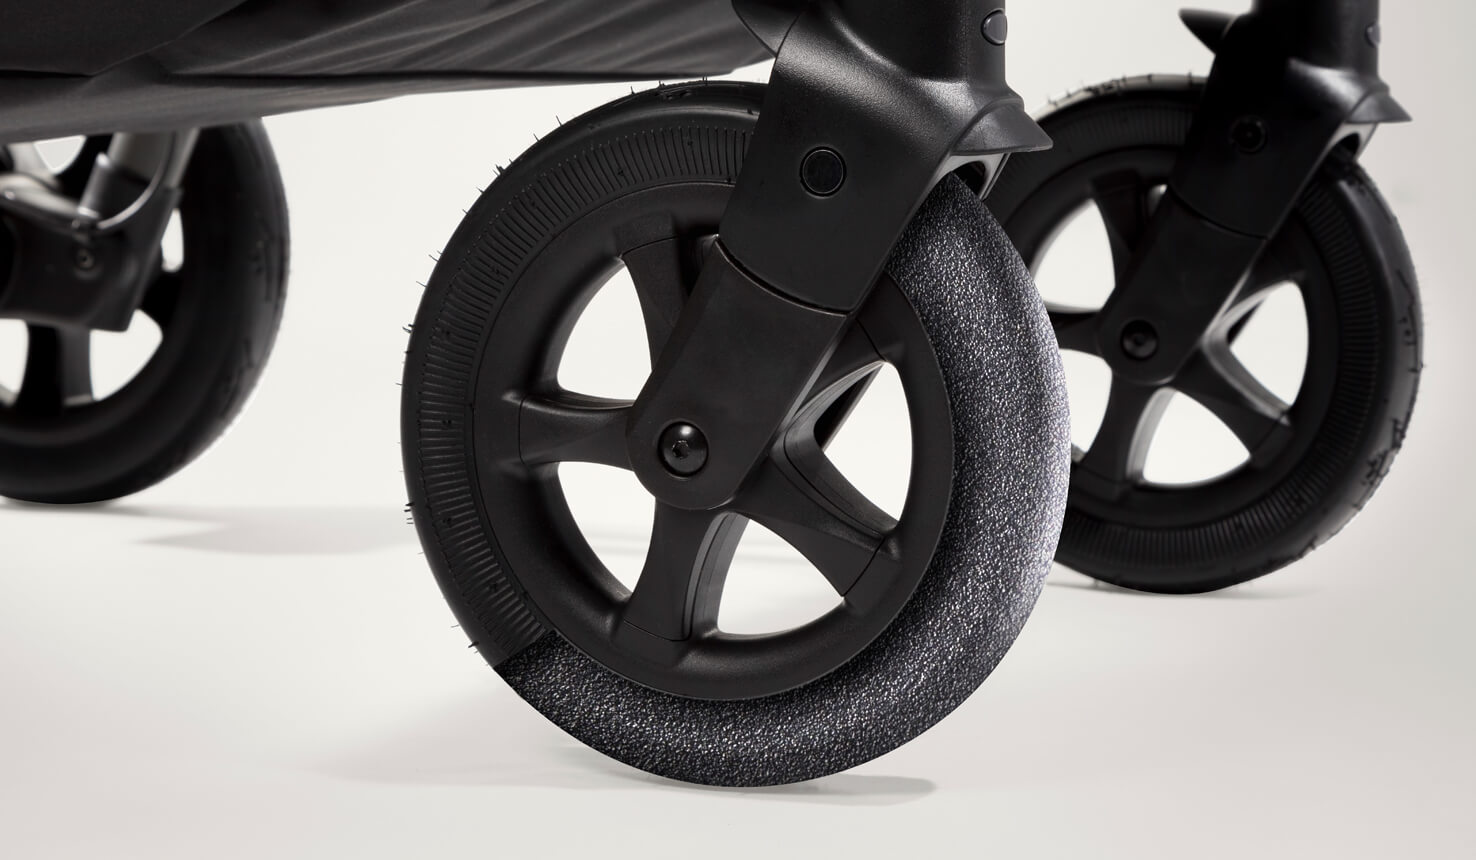 Joie aeria pram tyres demonstrating foam filled rubber tyres. 